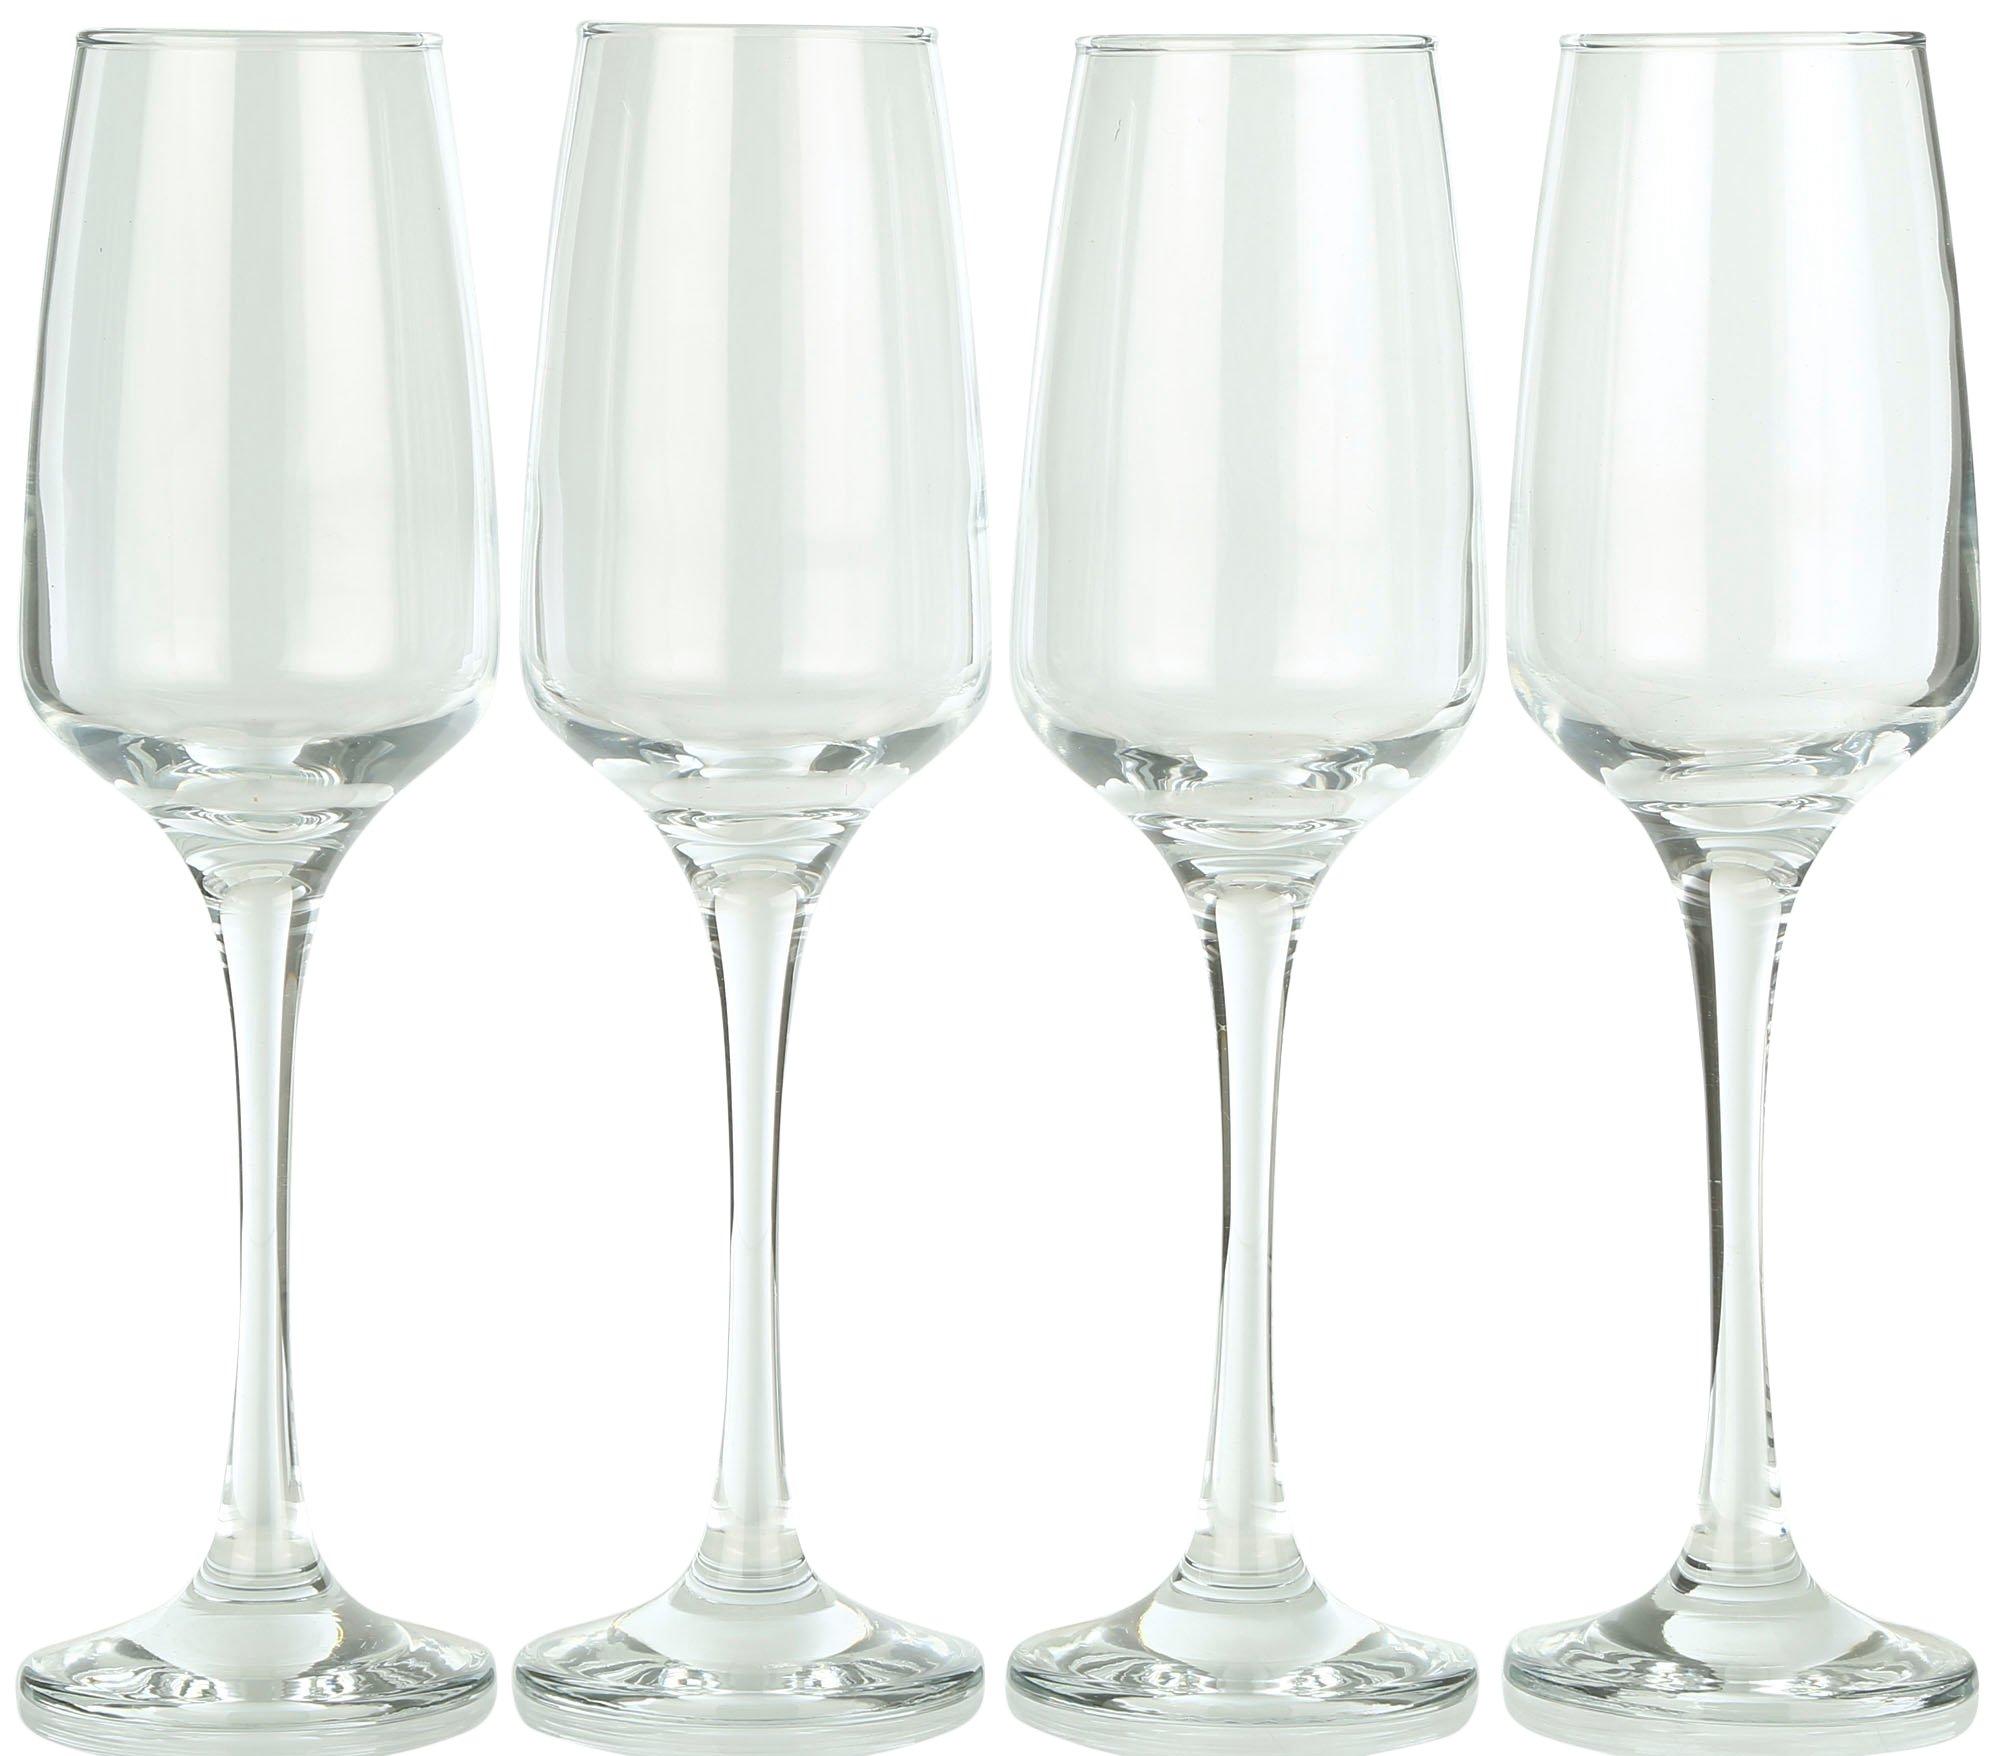 4pc Champagne Glass Set